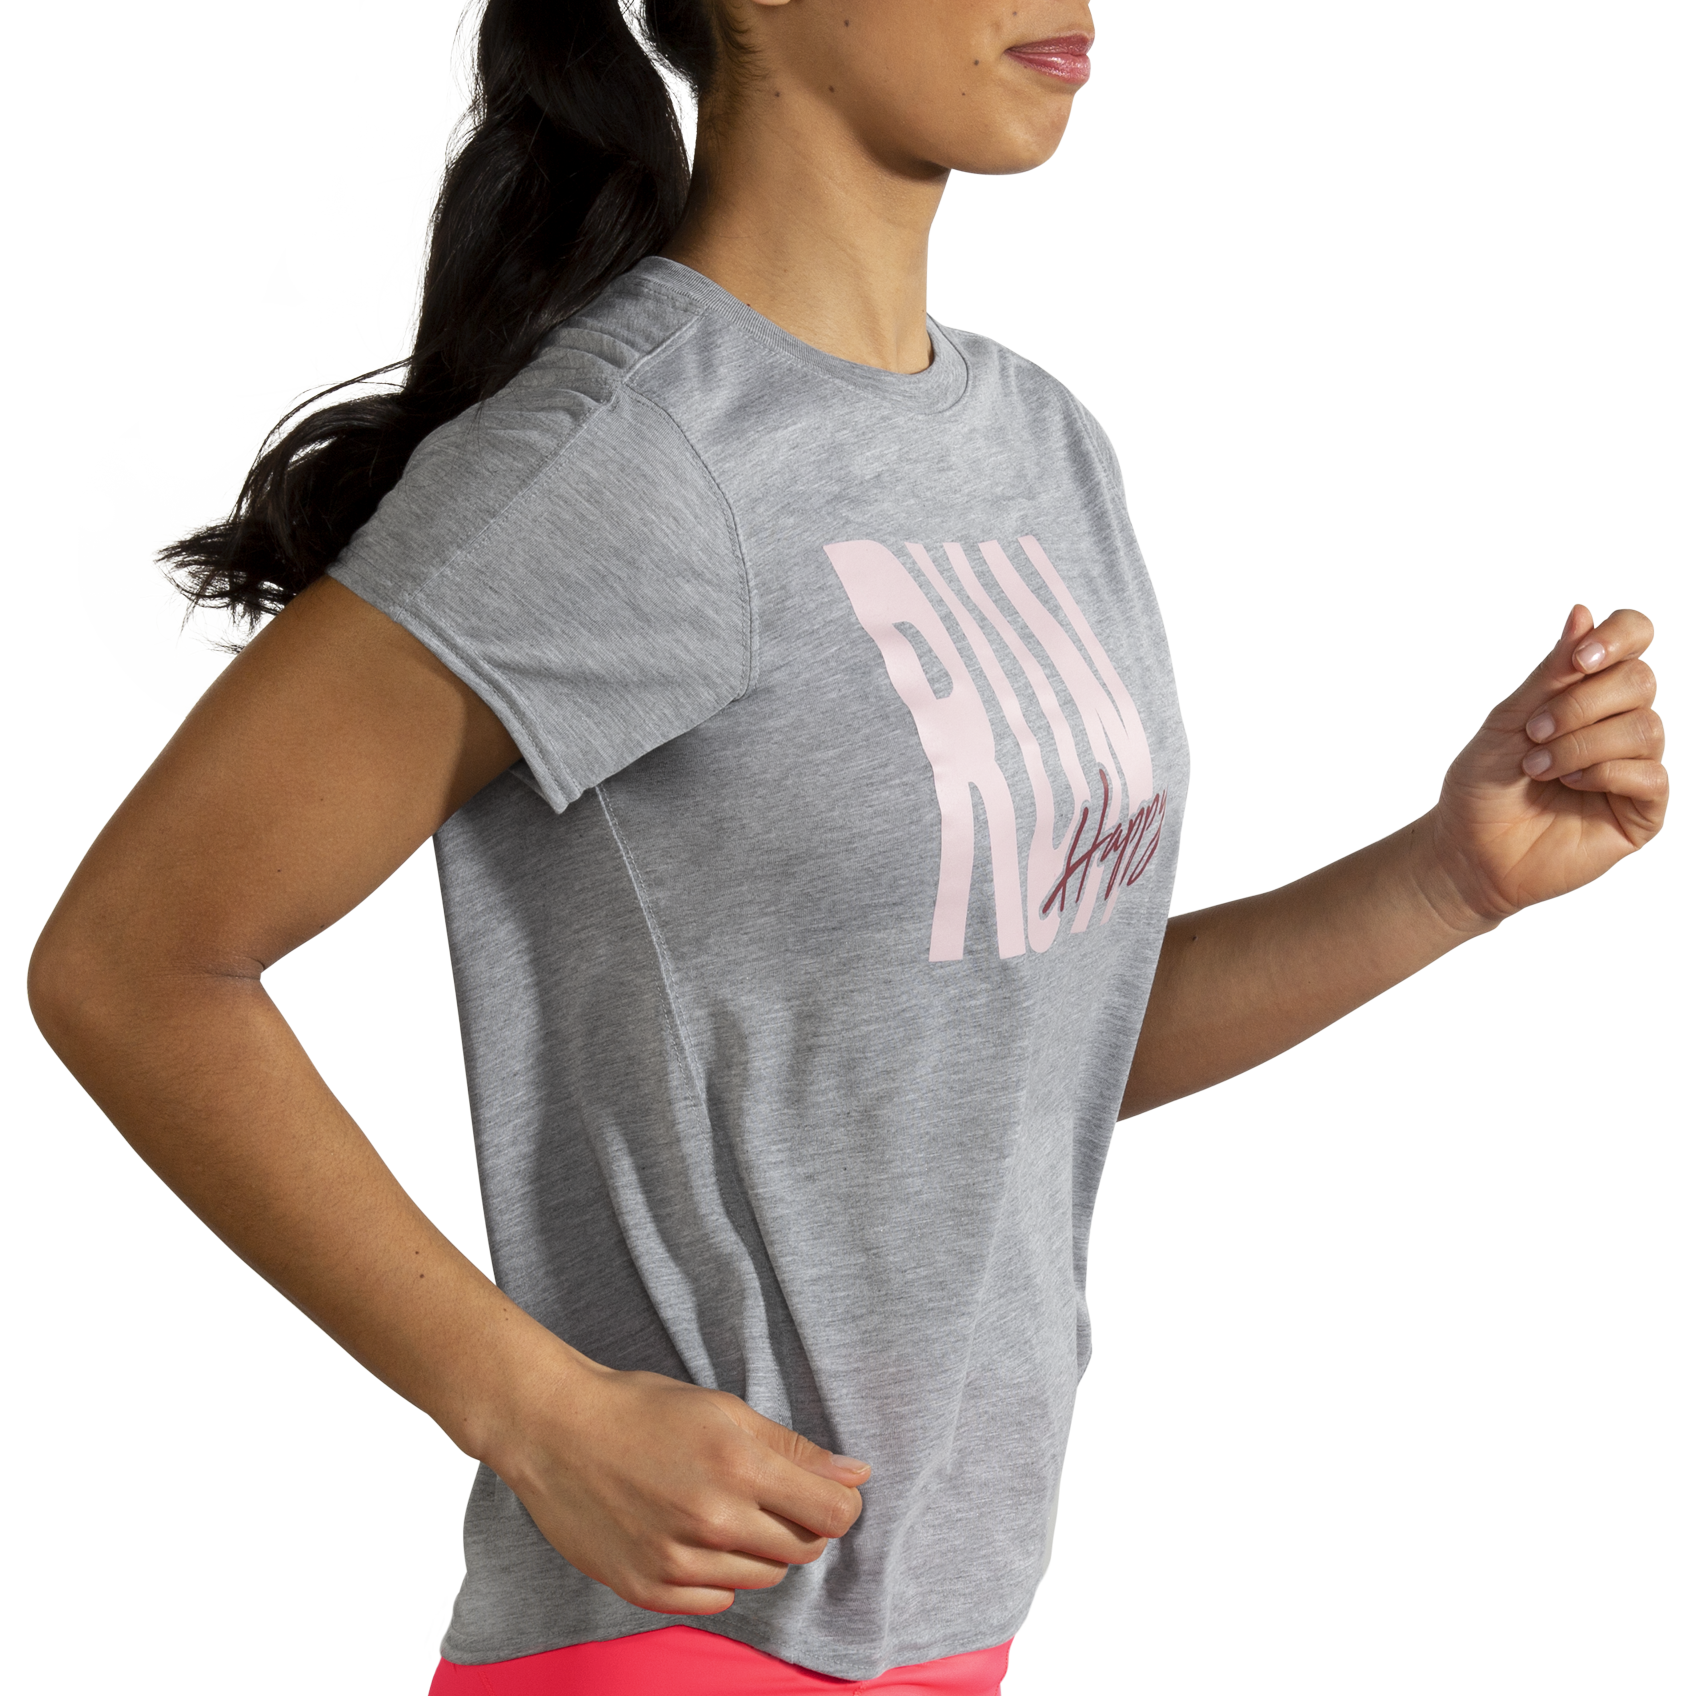 Small Details about   Brooks Women's Distance Graphic Tee Short Sleeve Running Shirt 